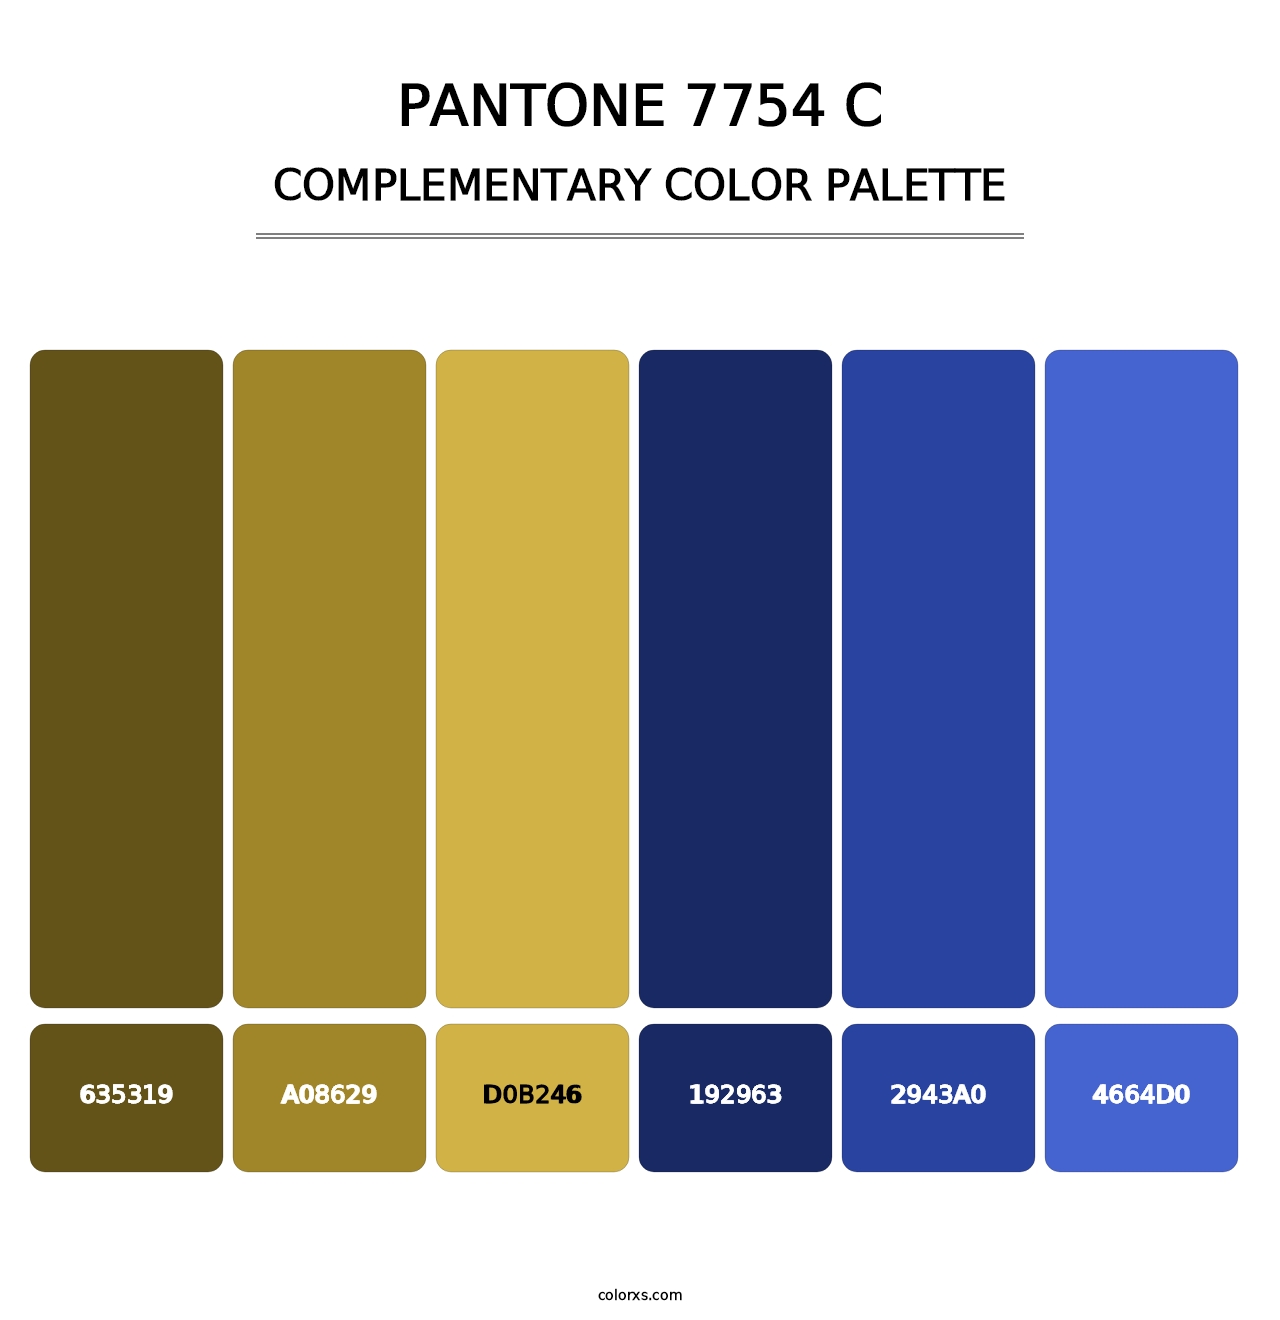 PANTONE 7754 C - Complementary Color Palette